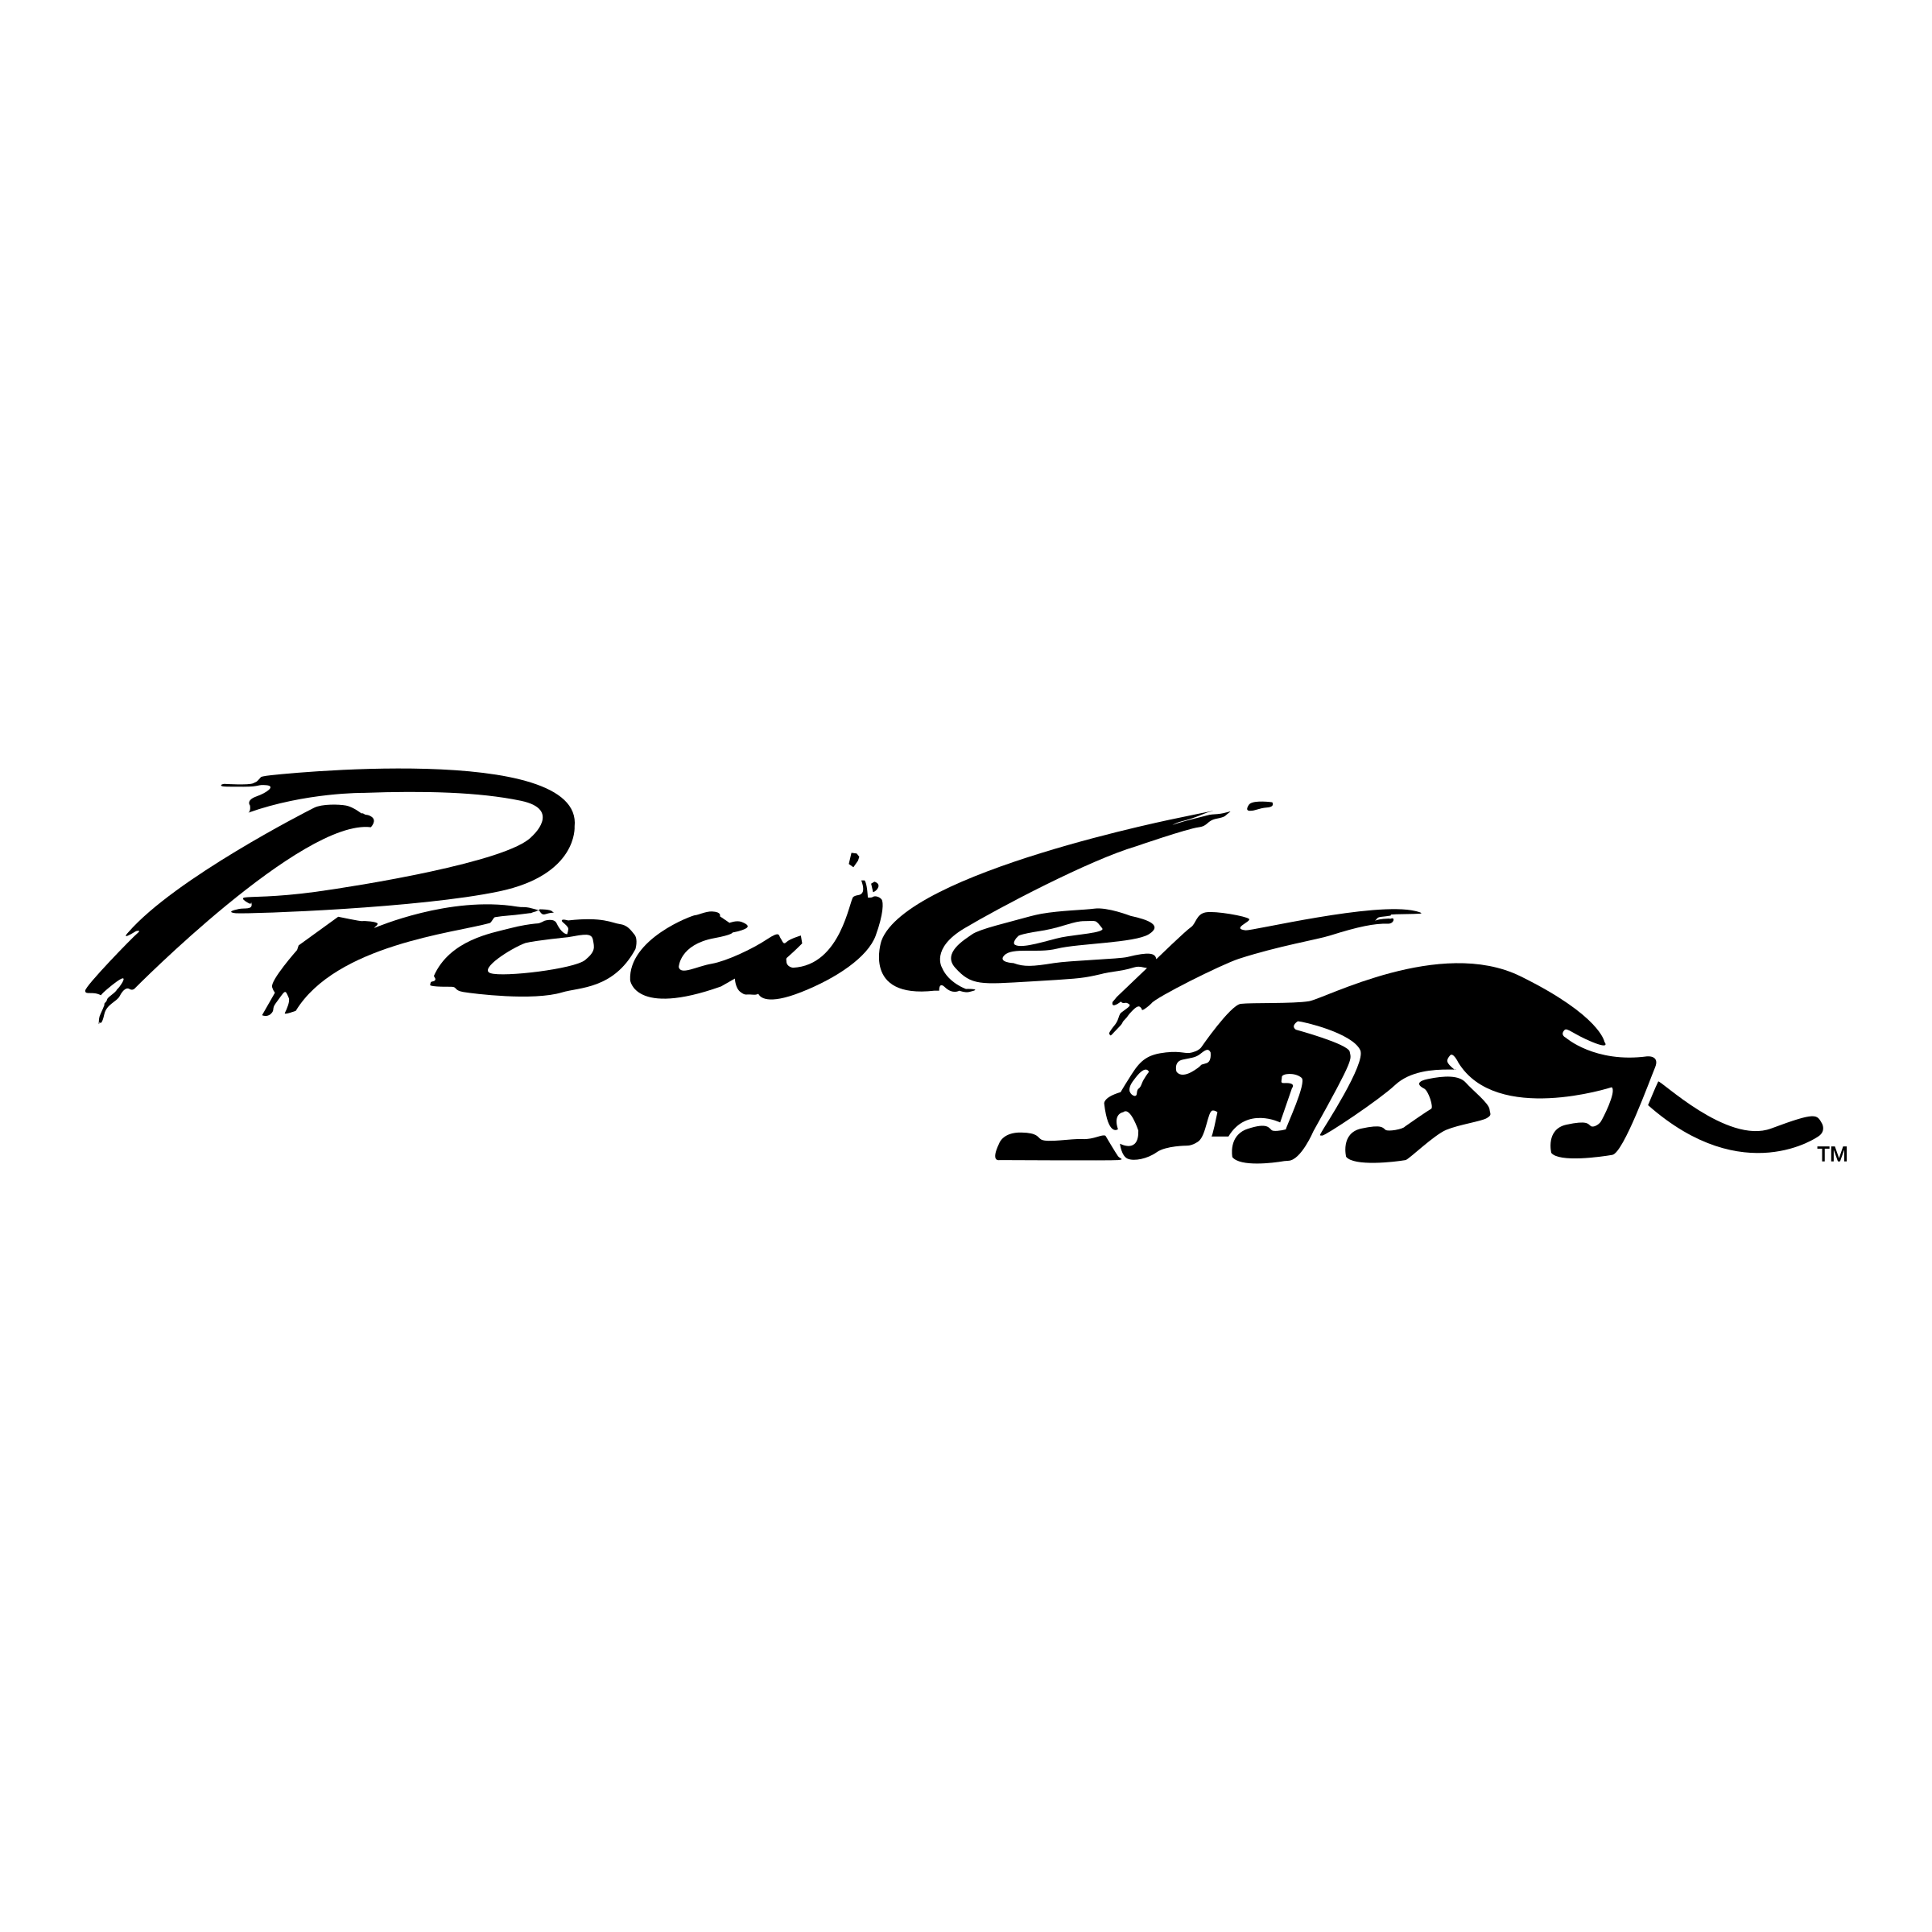 Prowler Logo - Prowler Logo PNG Transparent & SVG Vector - Freebie Supply